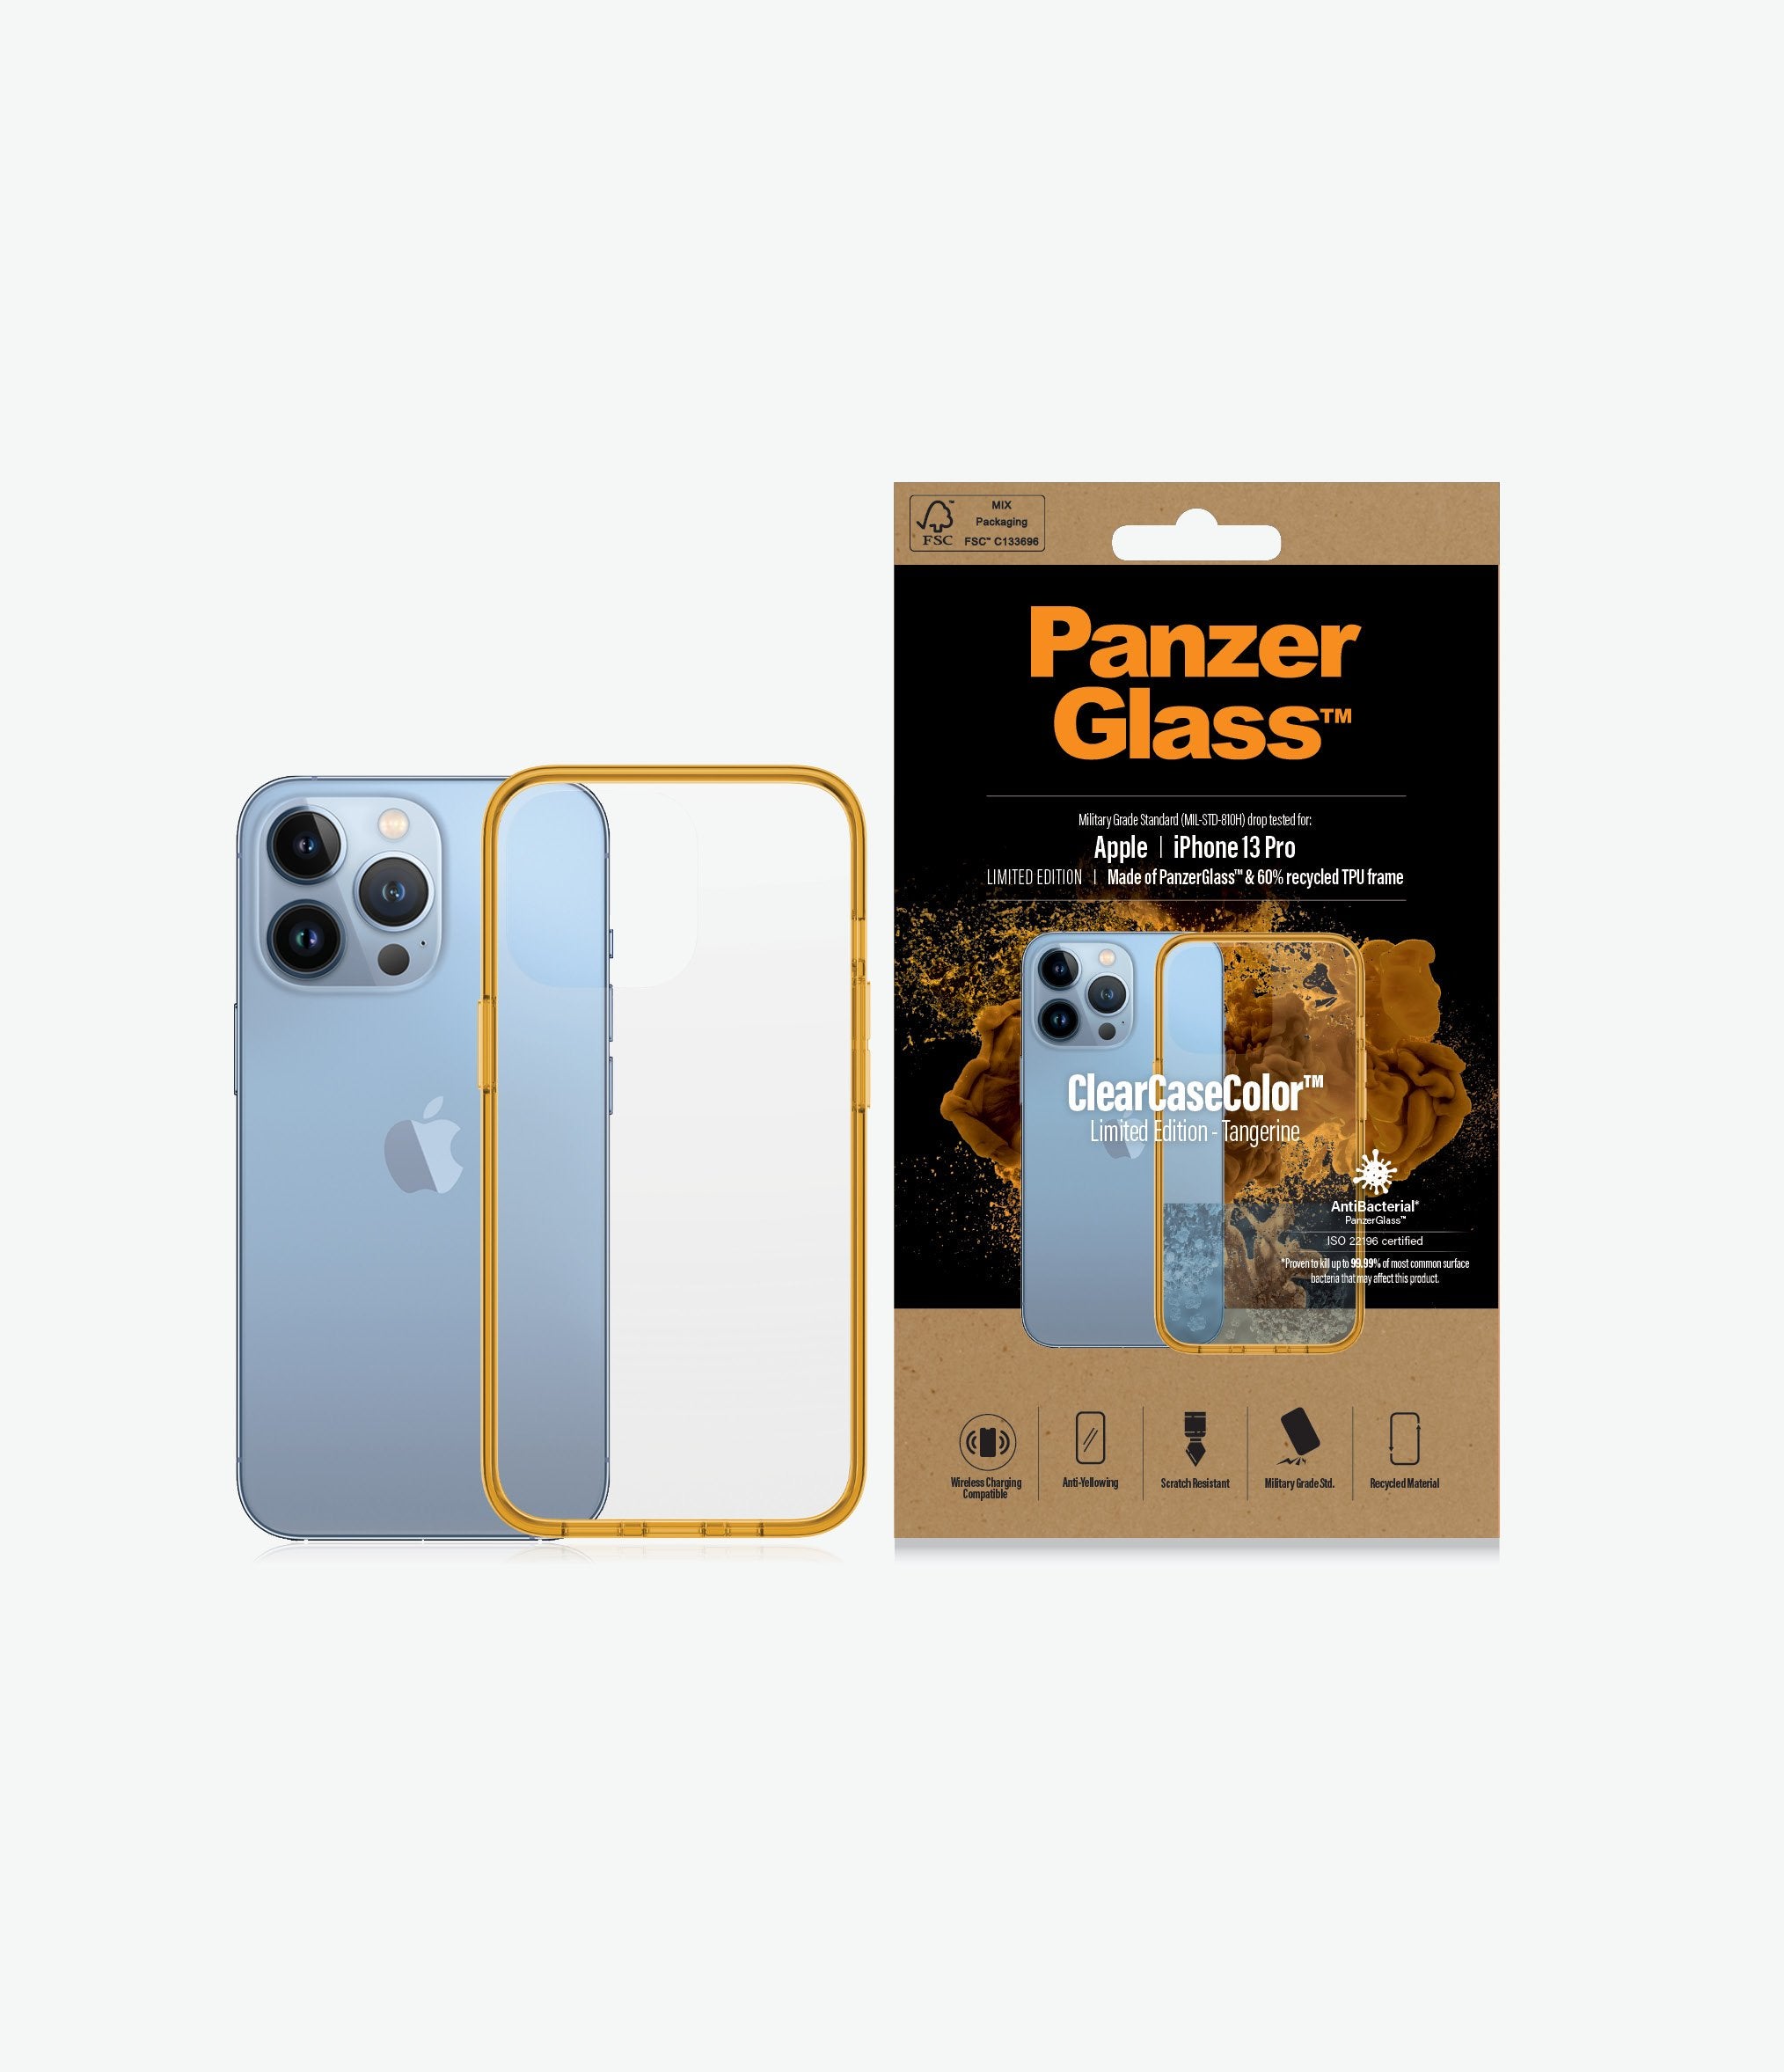 PanzerGlass Clear Case Color iPhone 13 Pro